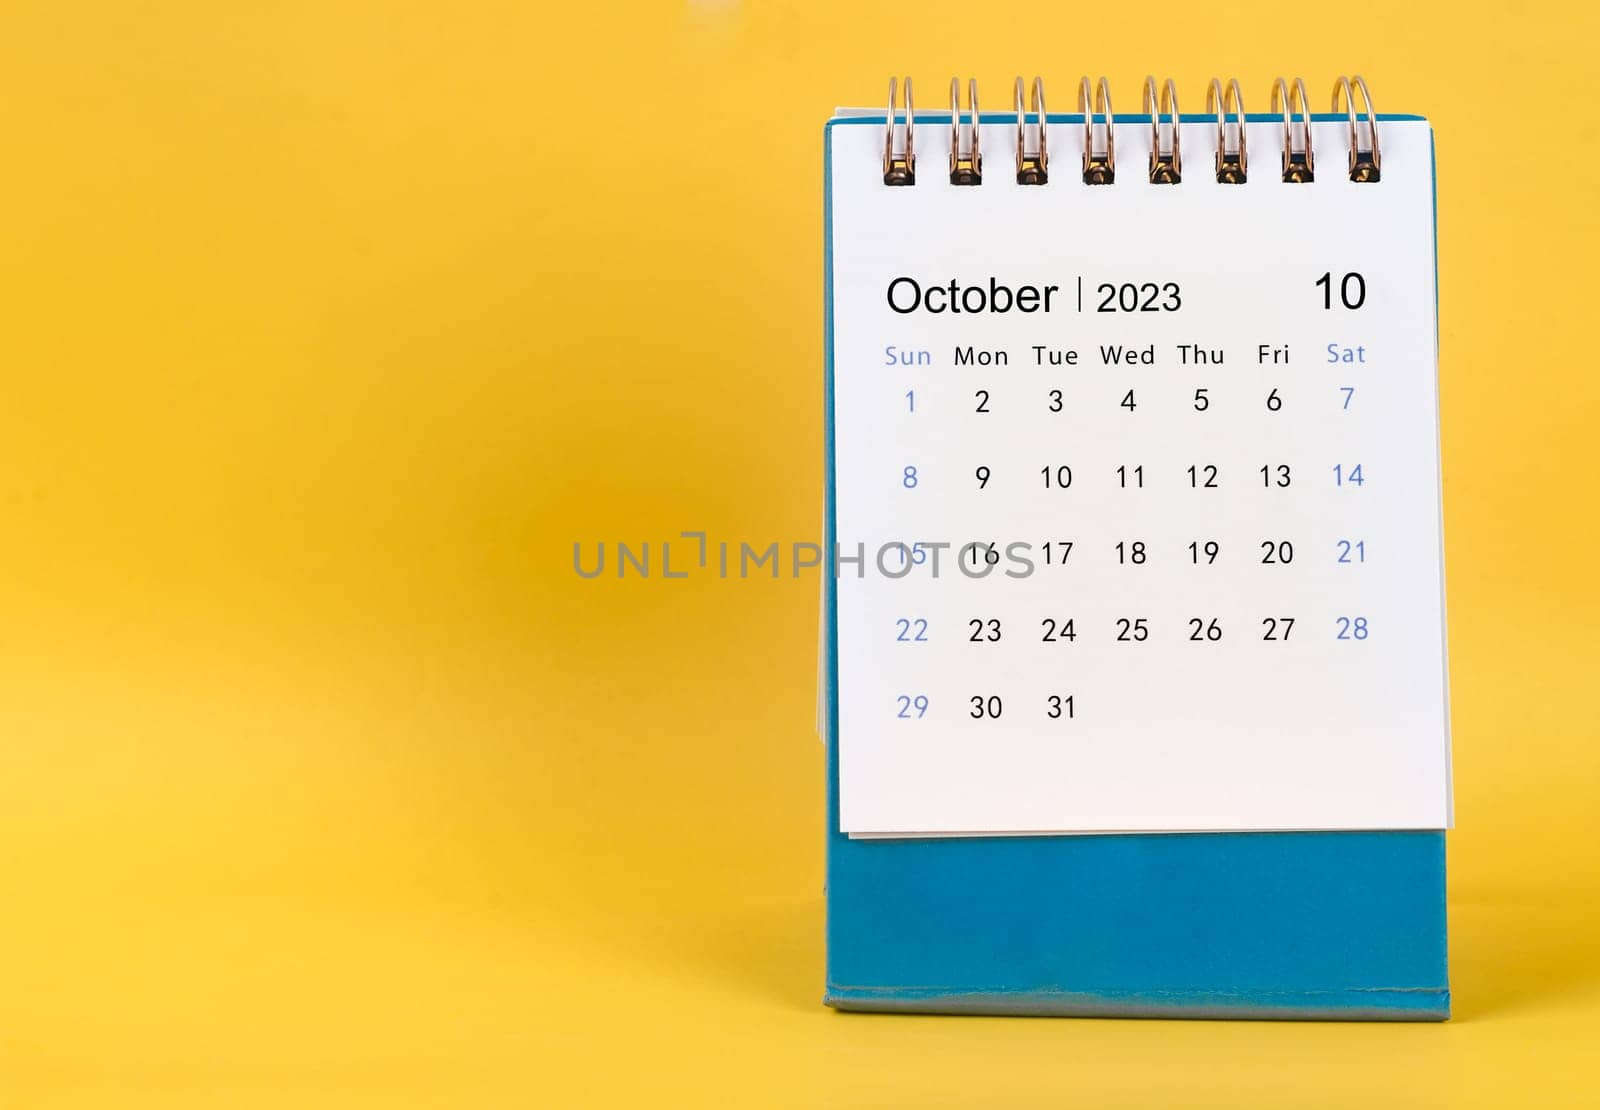 October 2023 desk calendar on yellow color background.